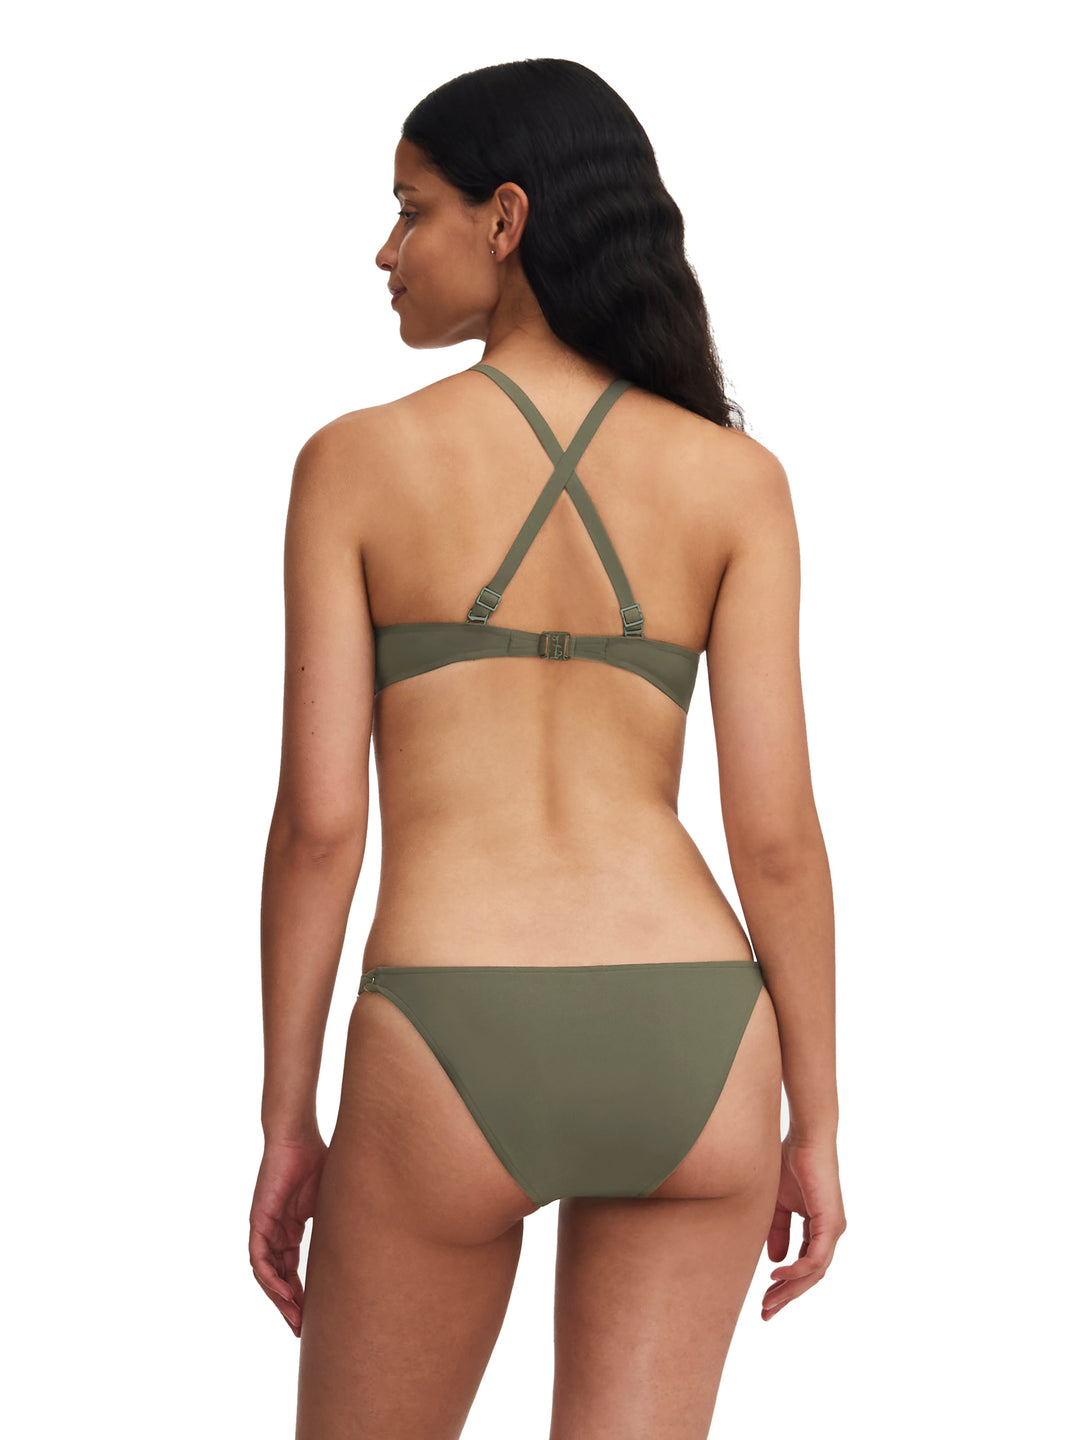 Chantelle Swimwear Emblem Covering Underwired Bikini - Khaki Green Full Cup Bikini Chantelle 